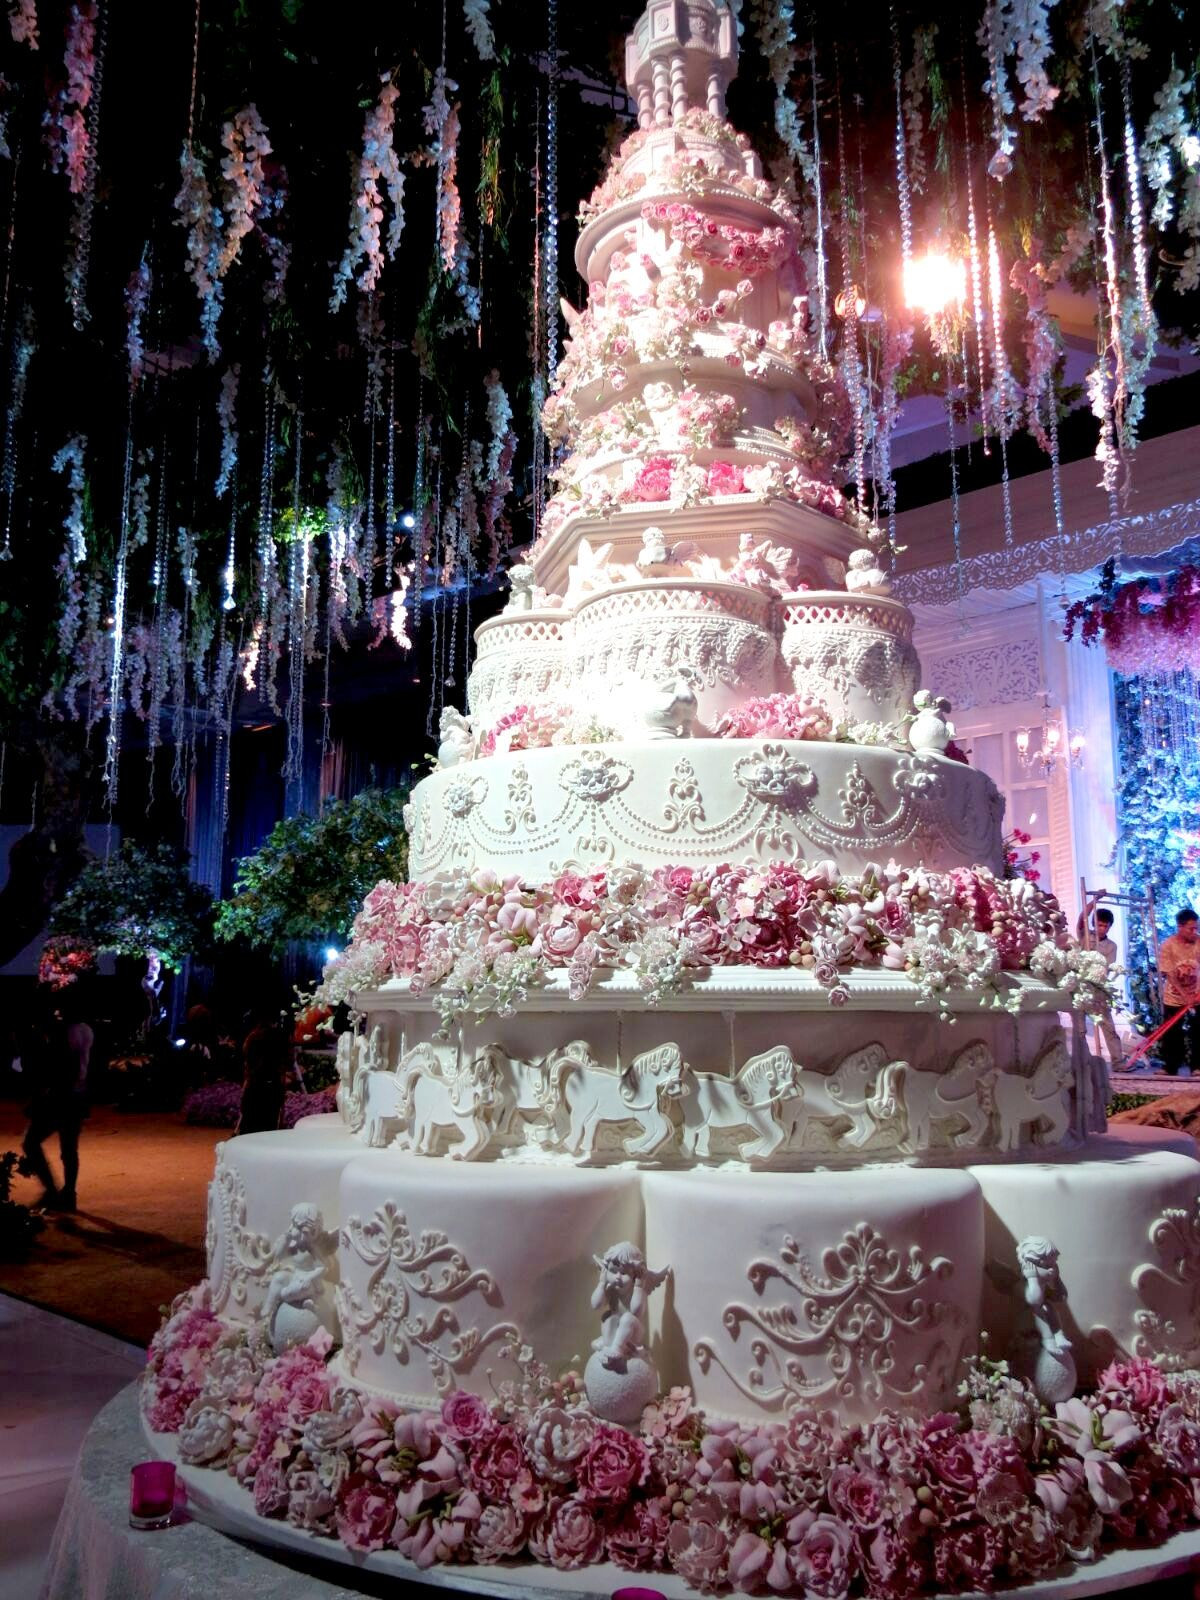 Hochzeitstorte Extravagant
 Le Novelle Cake by Le Novelle Cake